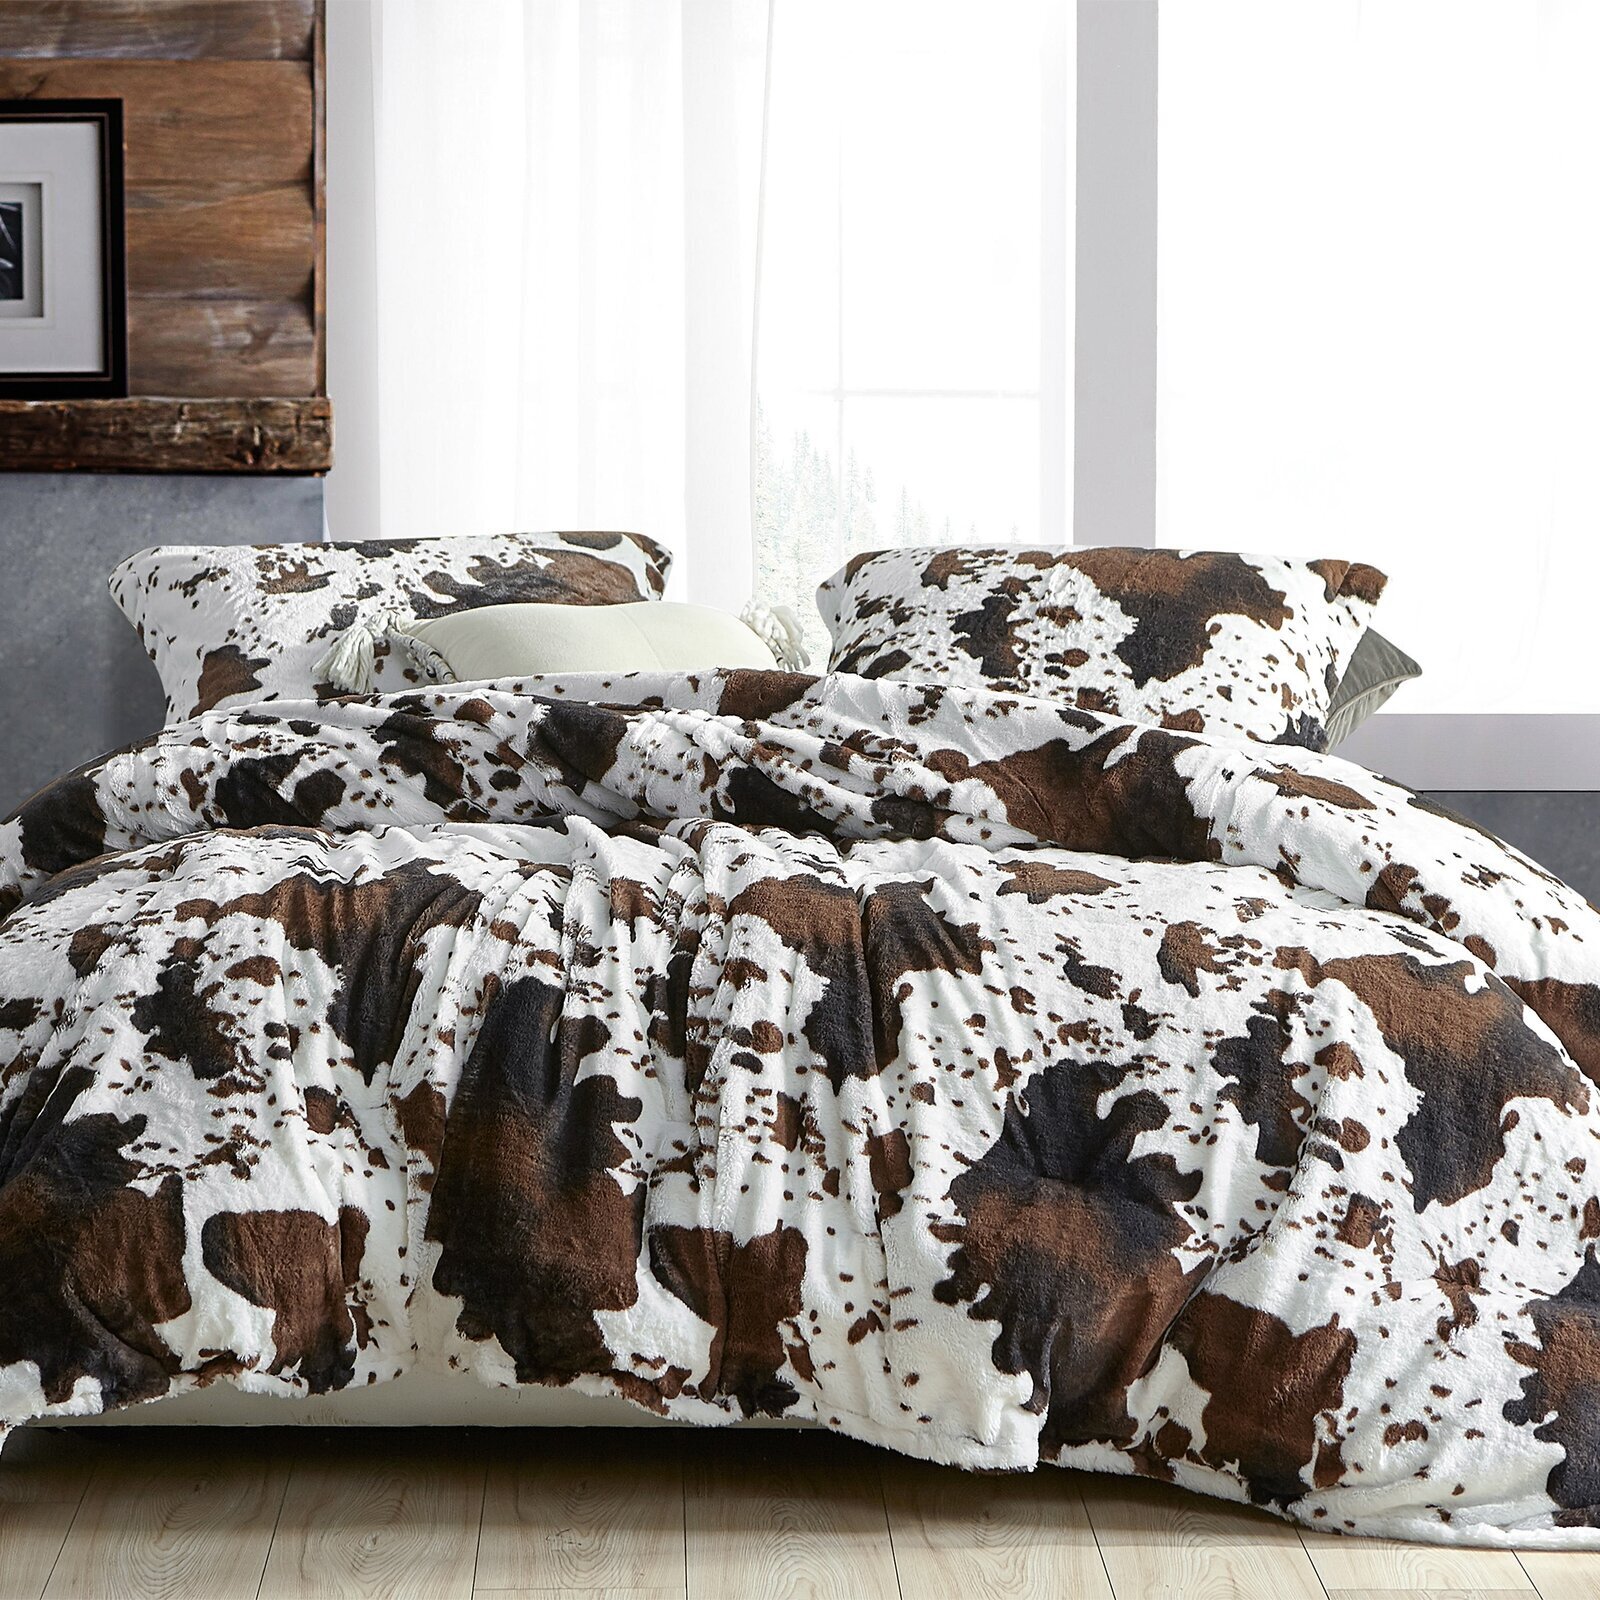 Cow print bedding